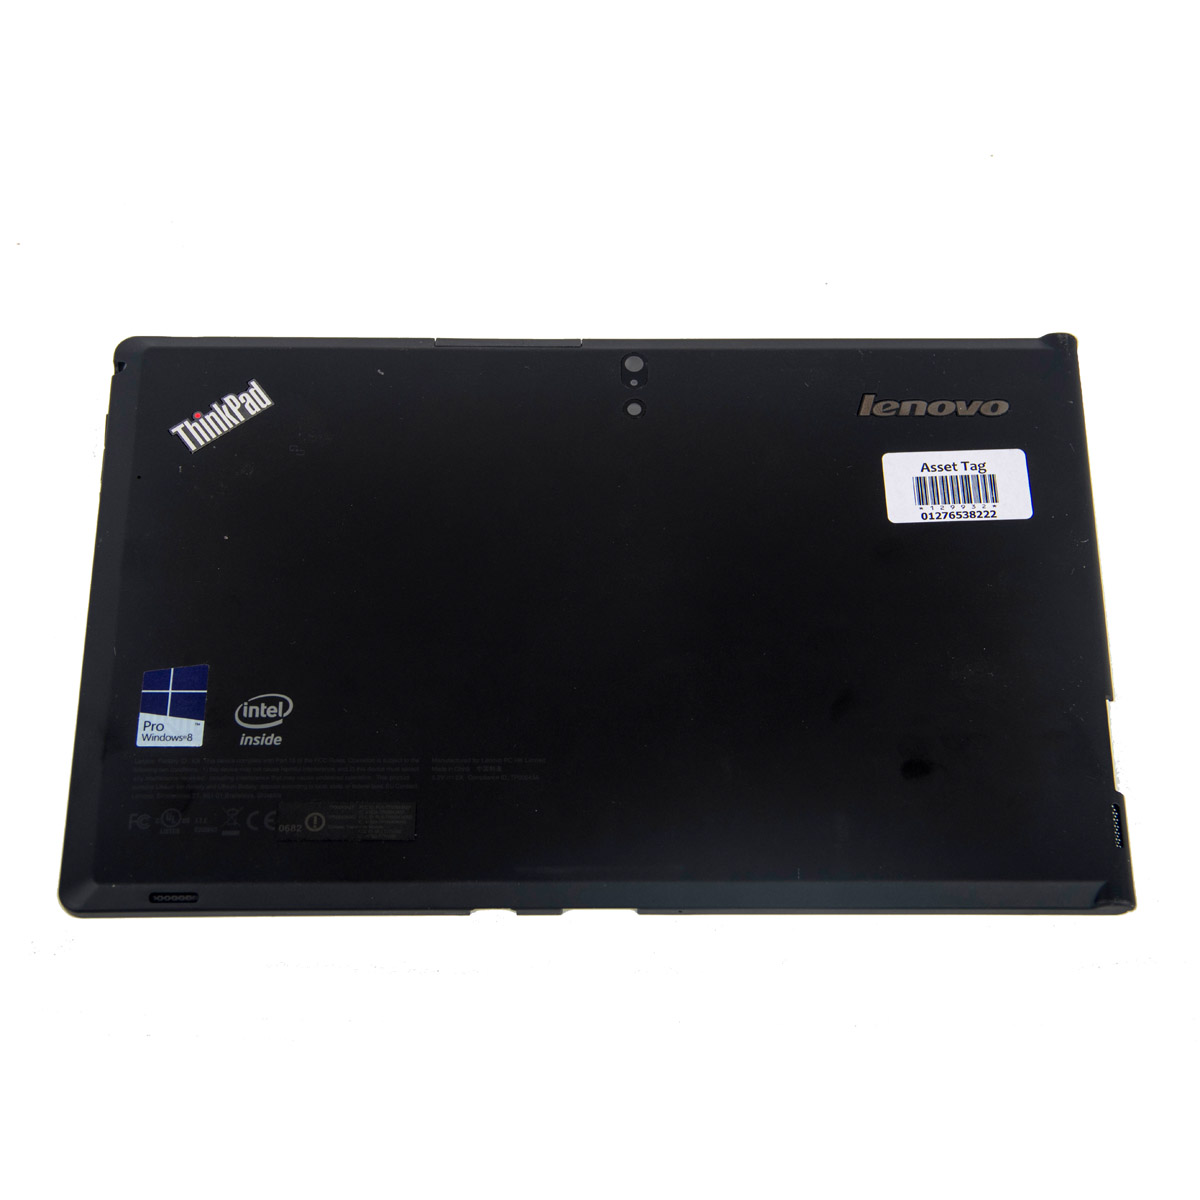 Base cover Lenovo ThinkPad Tablet 2 04X0518